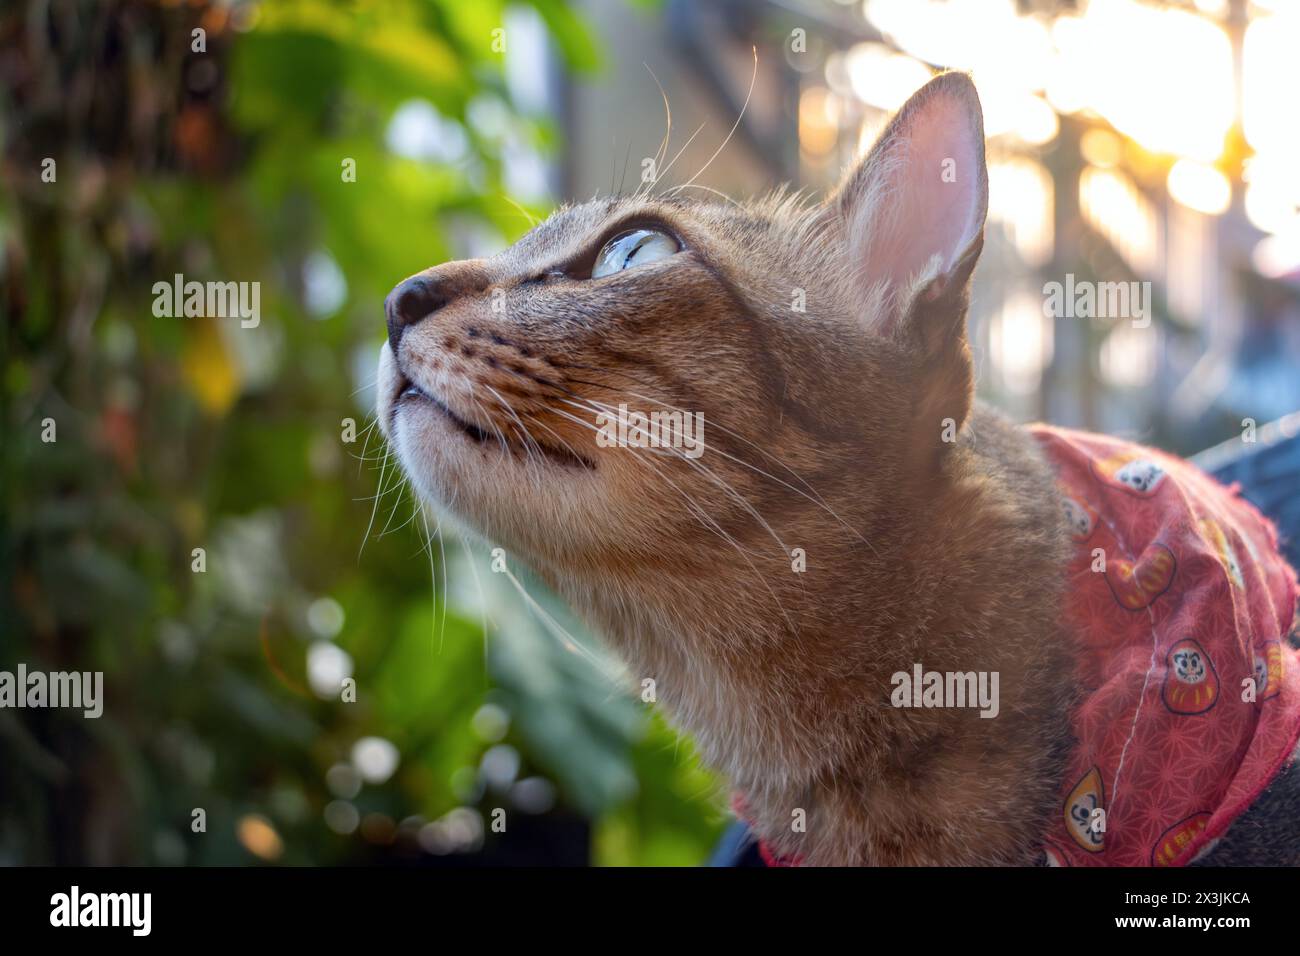 A cat motionlessly observes a bird on a tree in an evening garden Stock Photo